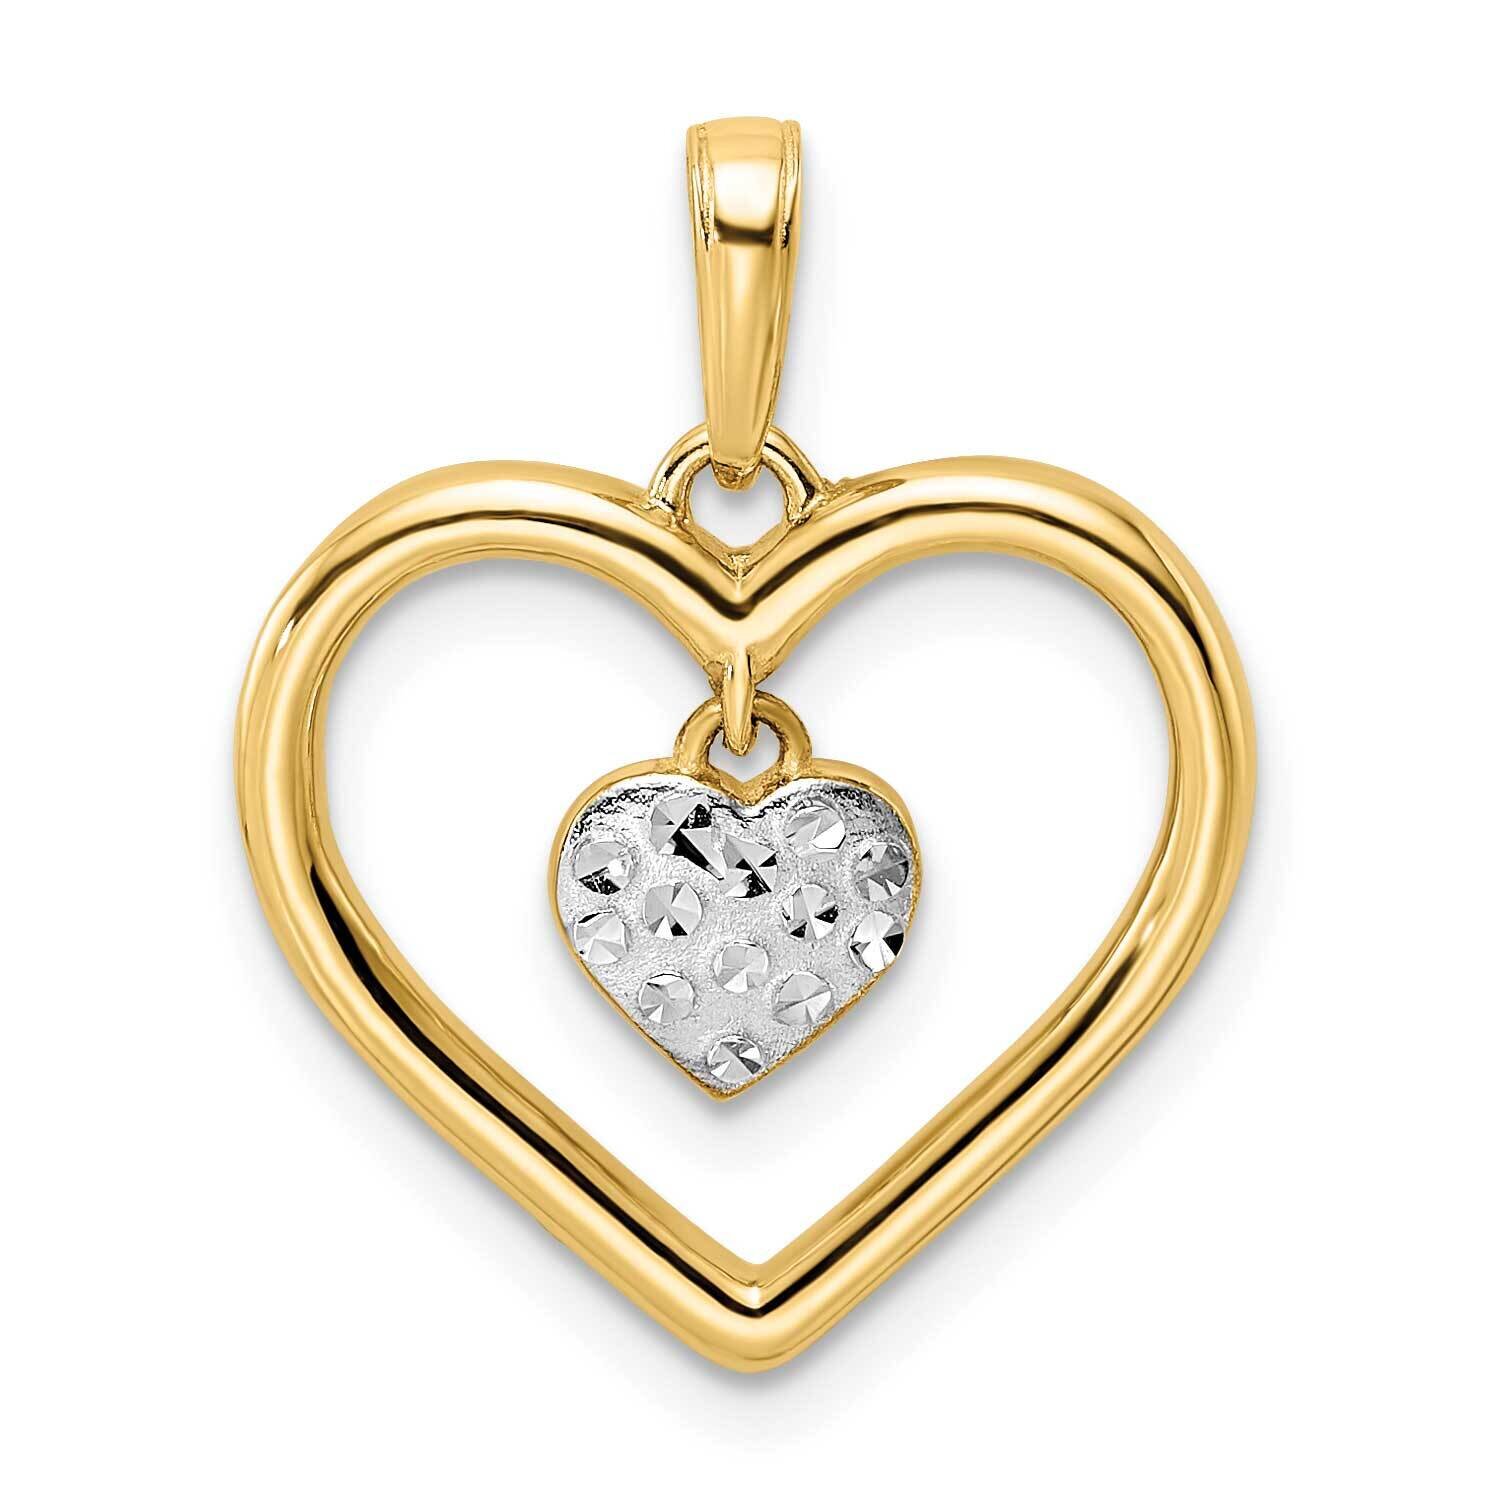 Heart with Dangle Heart Pendant 14k Gold and White Rhodium Diamond-Cut M2937